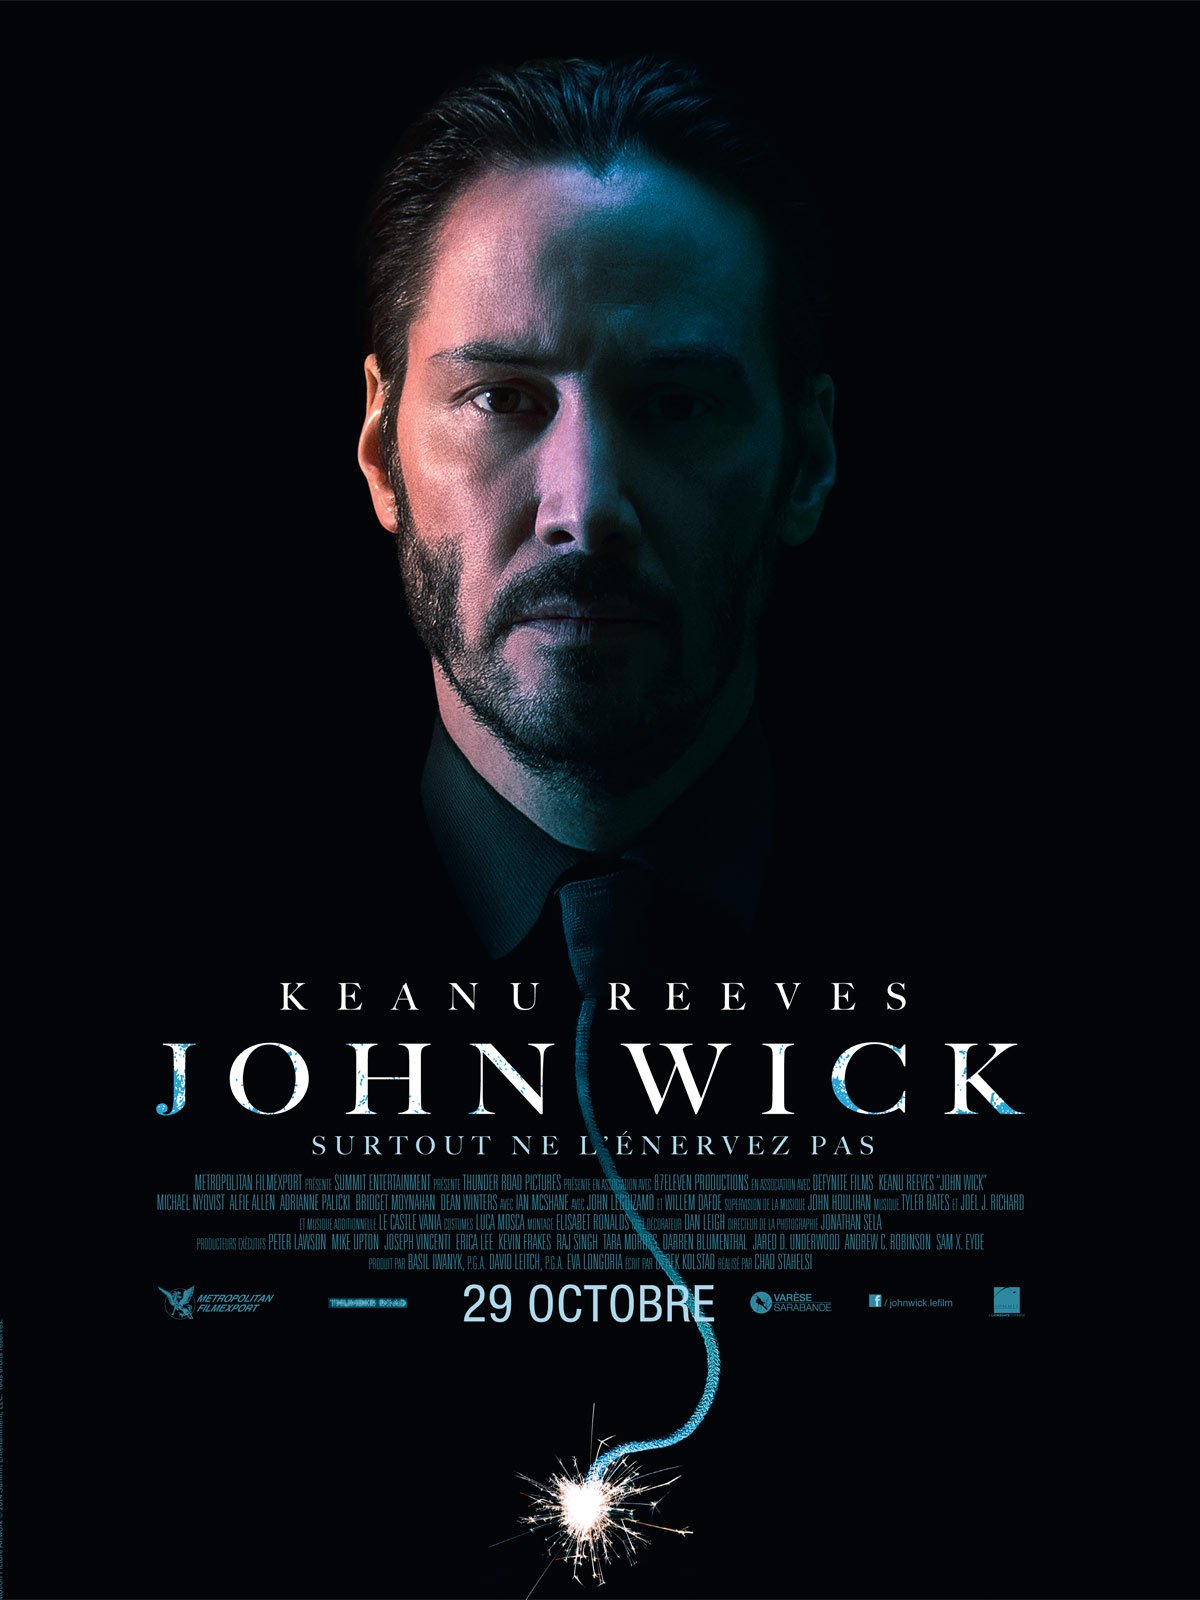 john wick 2 teljes film magyarul hd